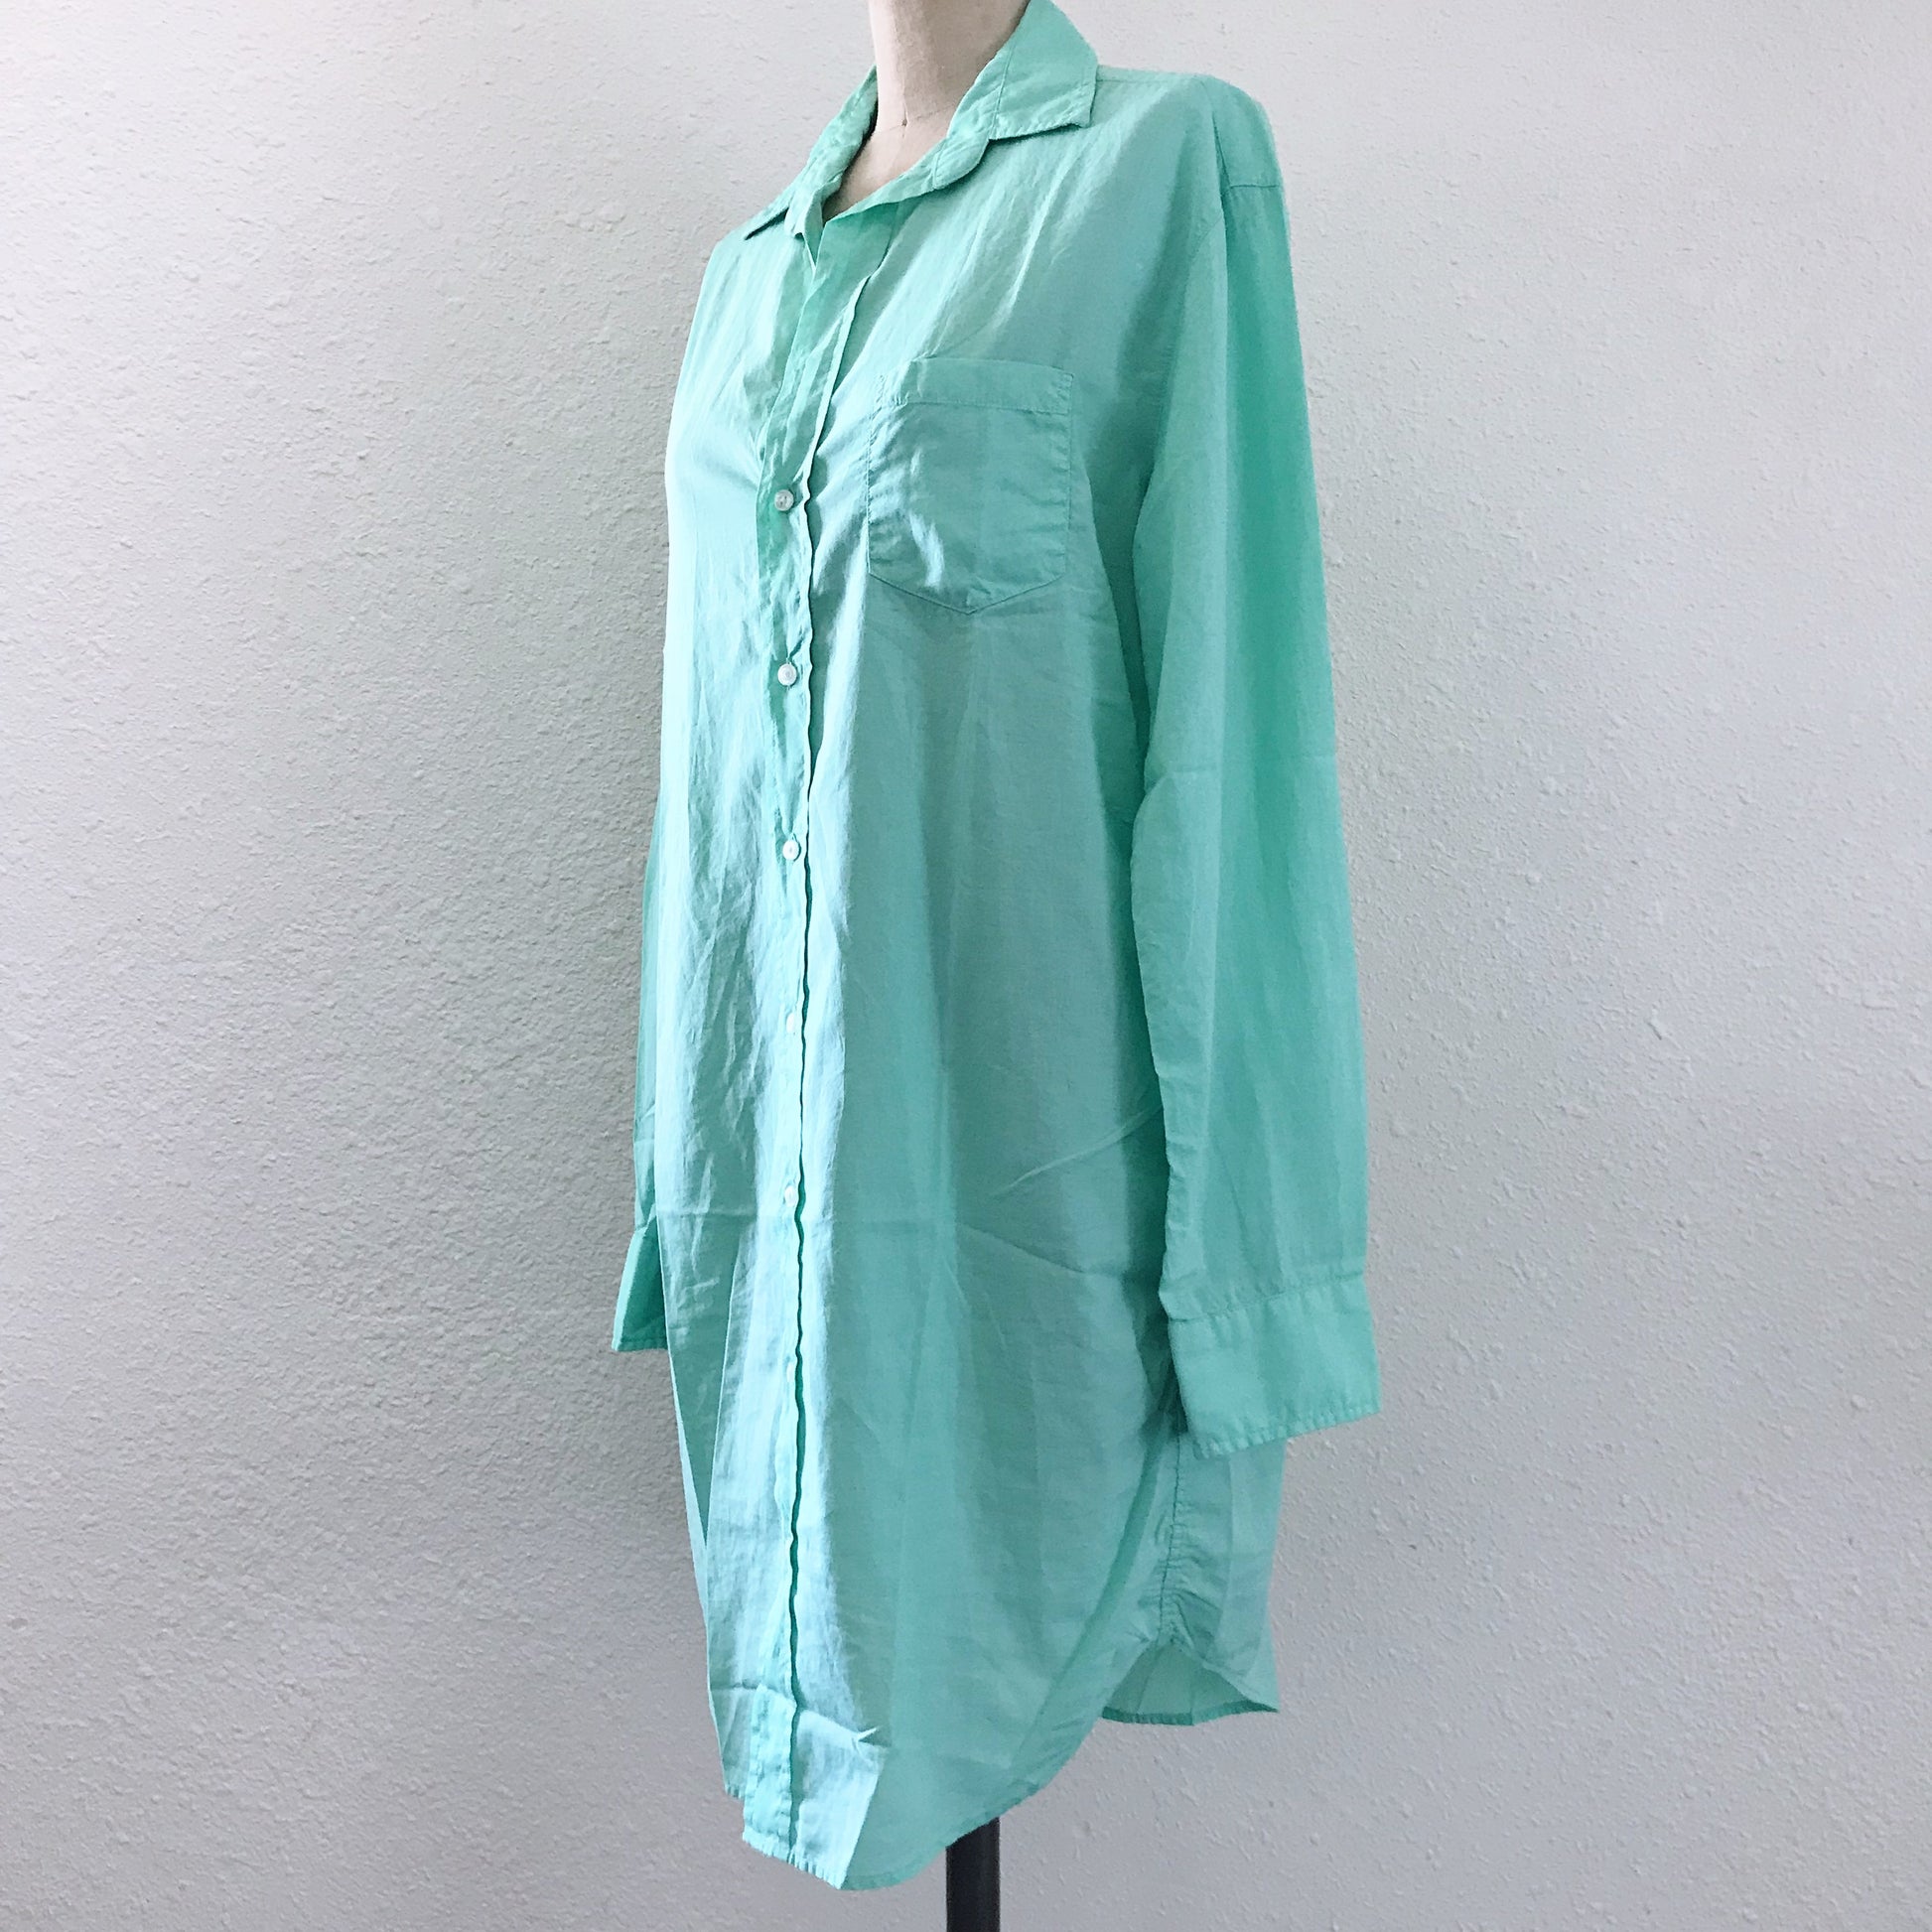 Prelovely | Frank & Eileen Seafoam Green Cotton Voile Tunic Top